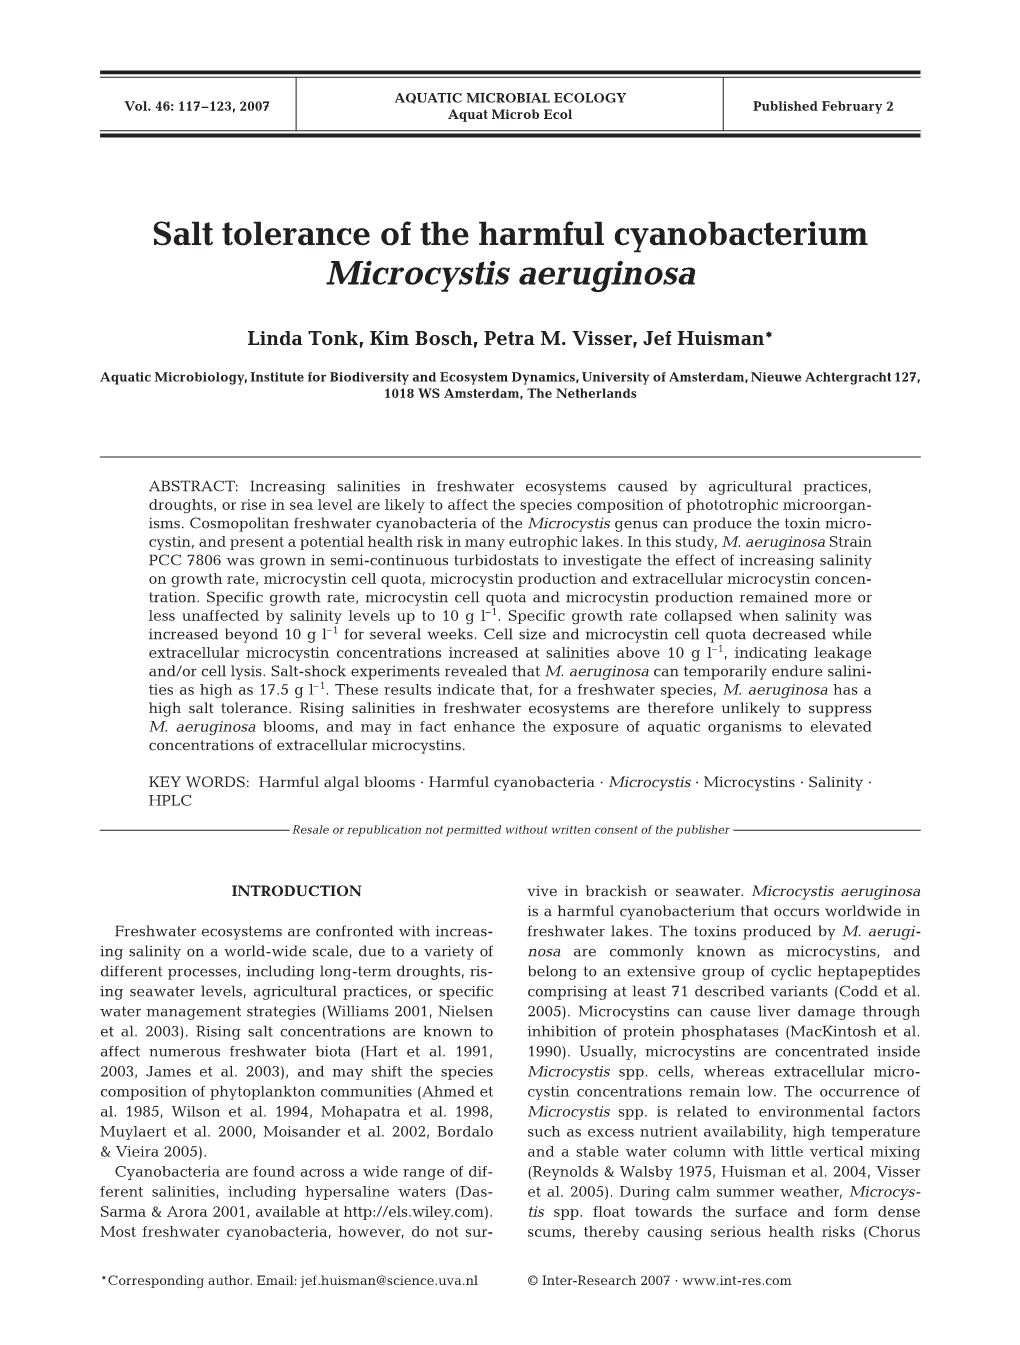 Salt Tolerance of the Harmful Cyanobacterium Microcystis Aeruginosa